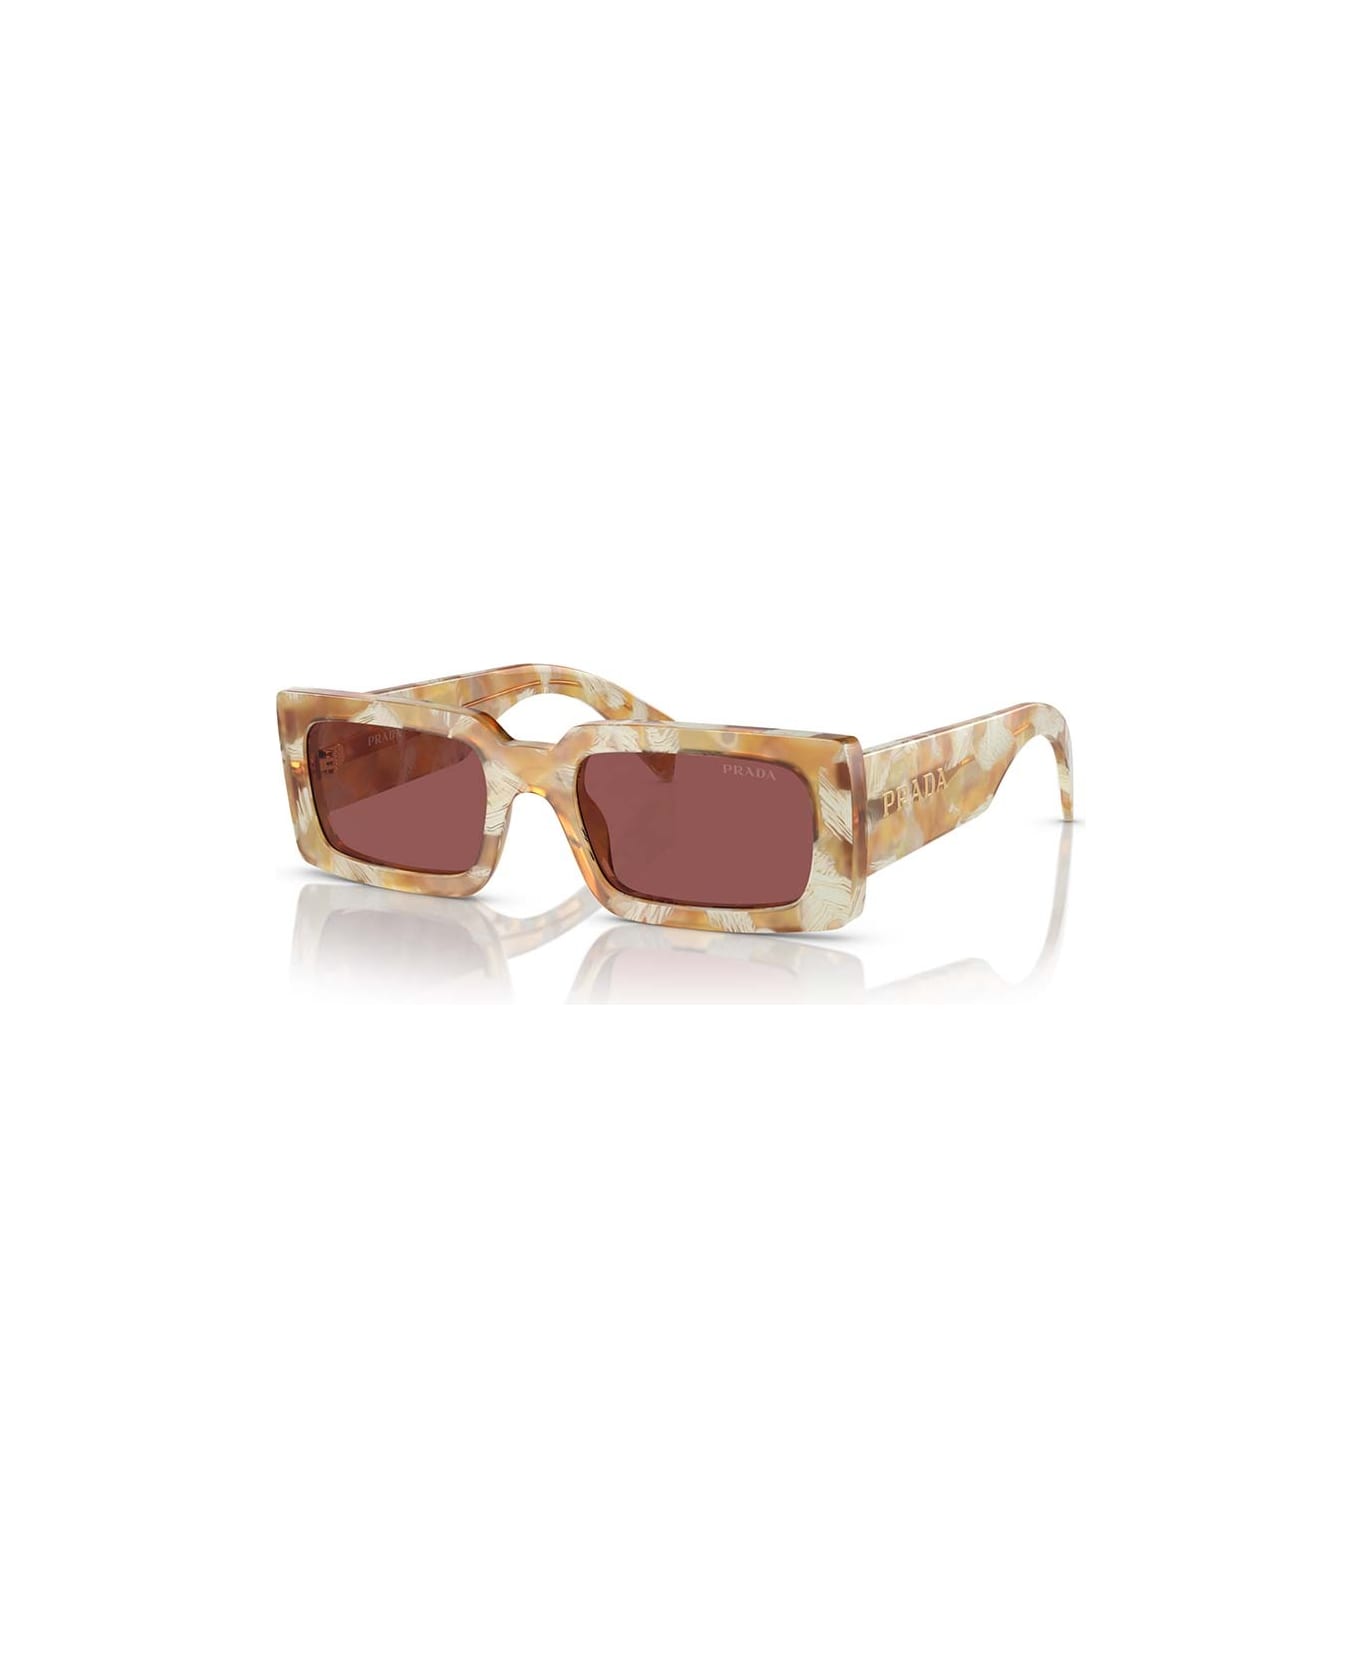 Prada Eyewear Sunglasses - Multicolor/Rosso